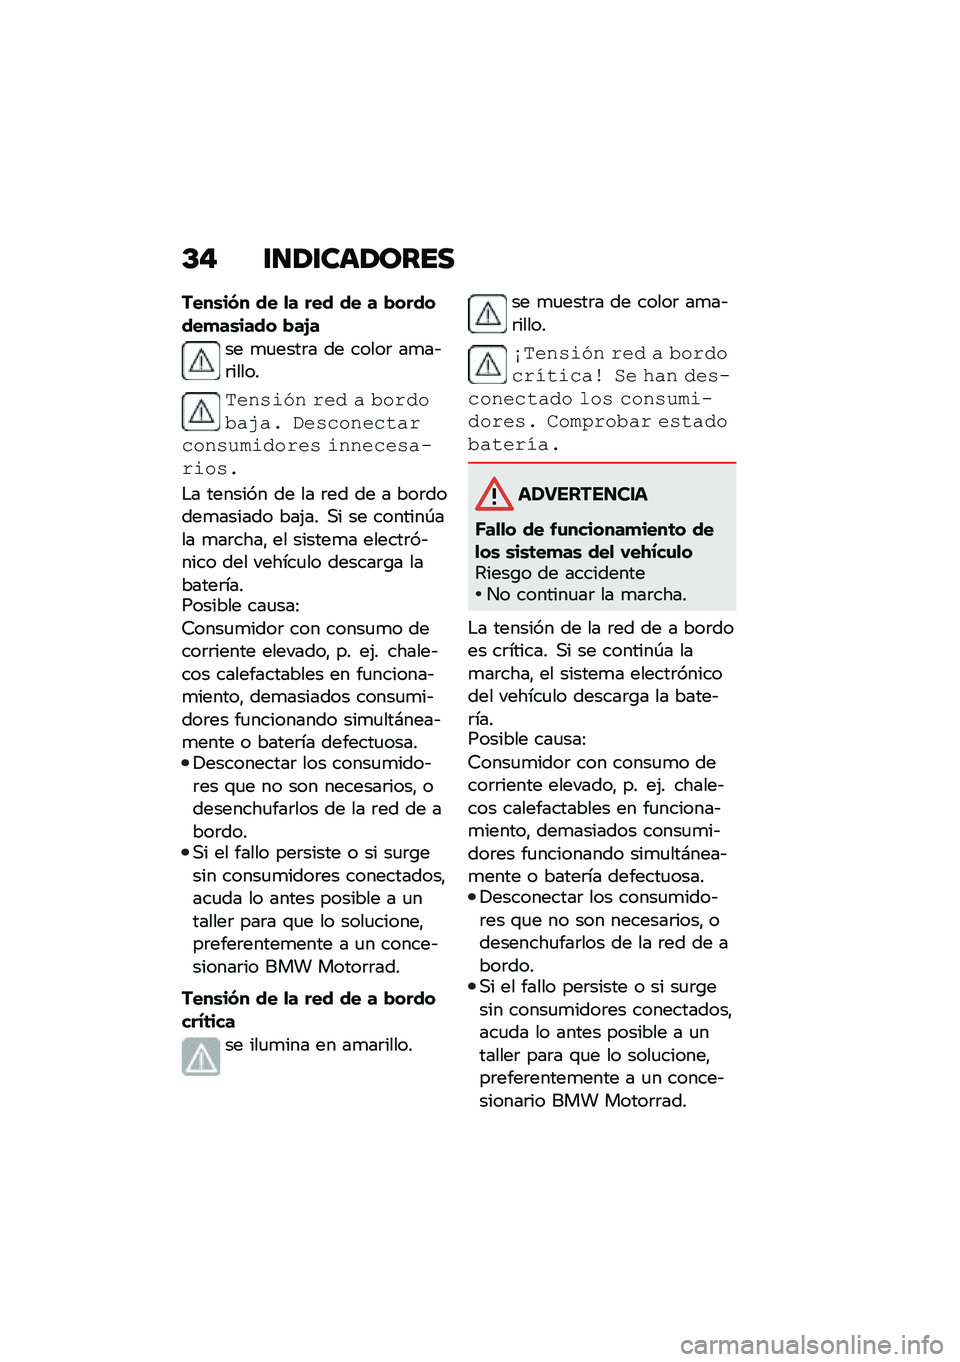 BMW MOTORRAD M 1000 RR 2021  Manual de instrucciones (in Spanish) �D�" �\f�
�1�\f���1����
����\b��� �� �
� ��� �� � �!�������
��\b���� �!��H�
�� �
�
����	� �� �����	 ��
��&�	�����
�����\f�� ��� � ����